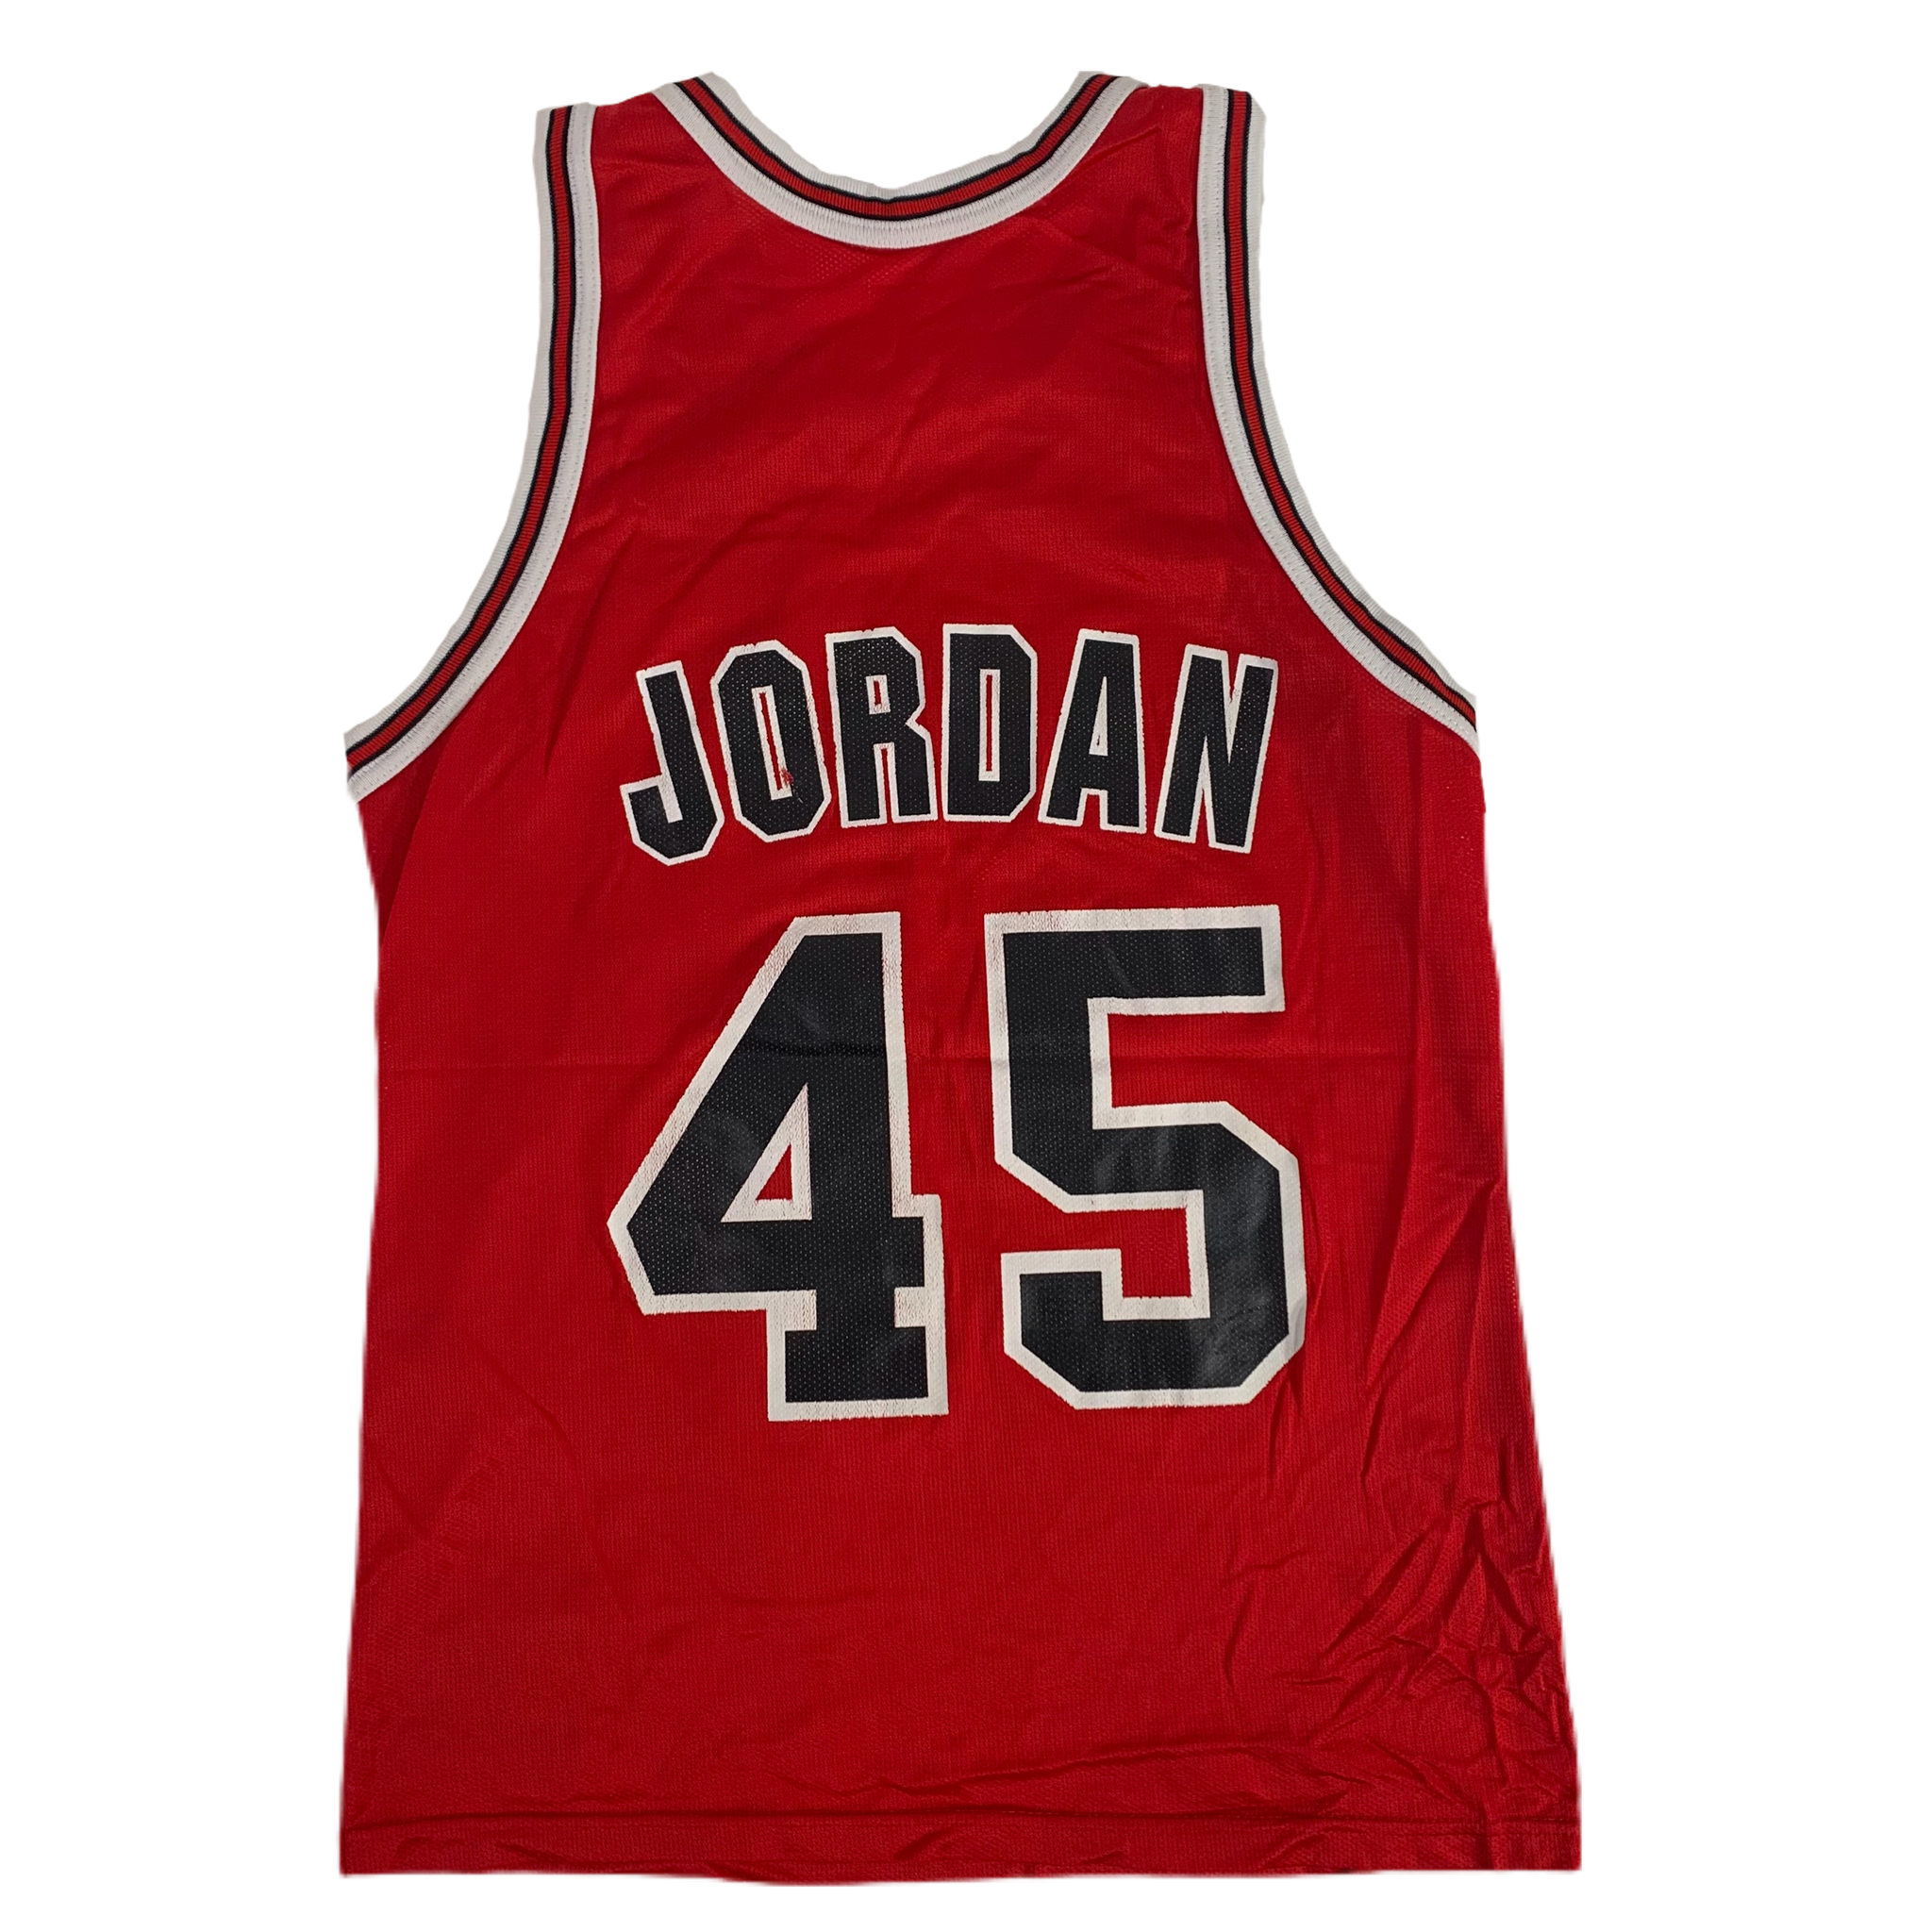 Vintage Chicago Bulls Michael Jordan #45 Champion Basketball Jersey